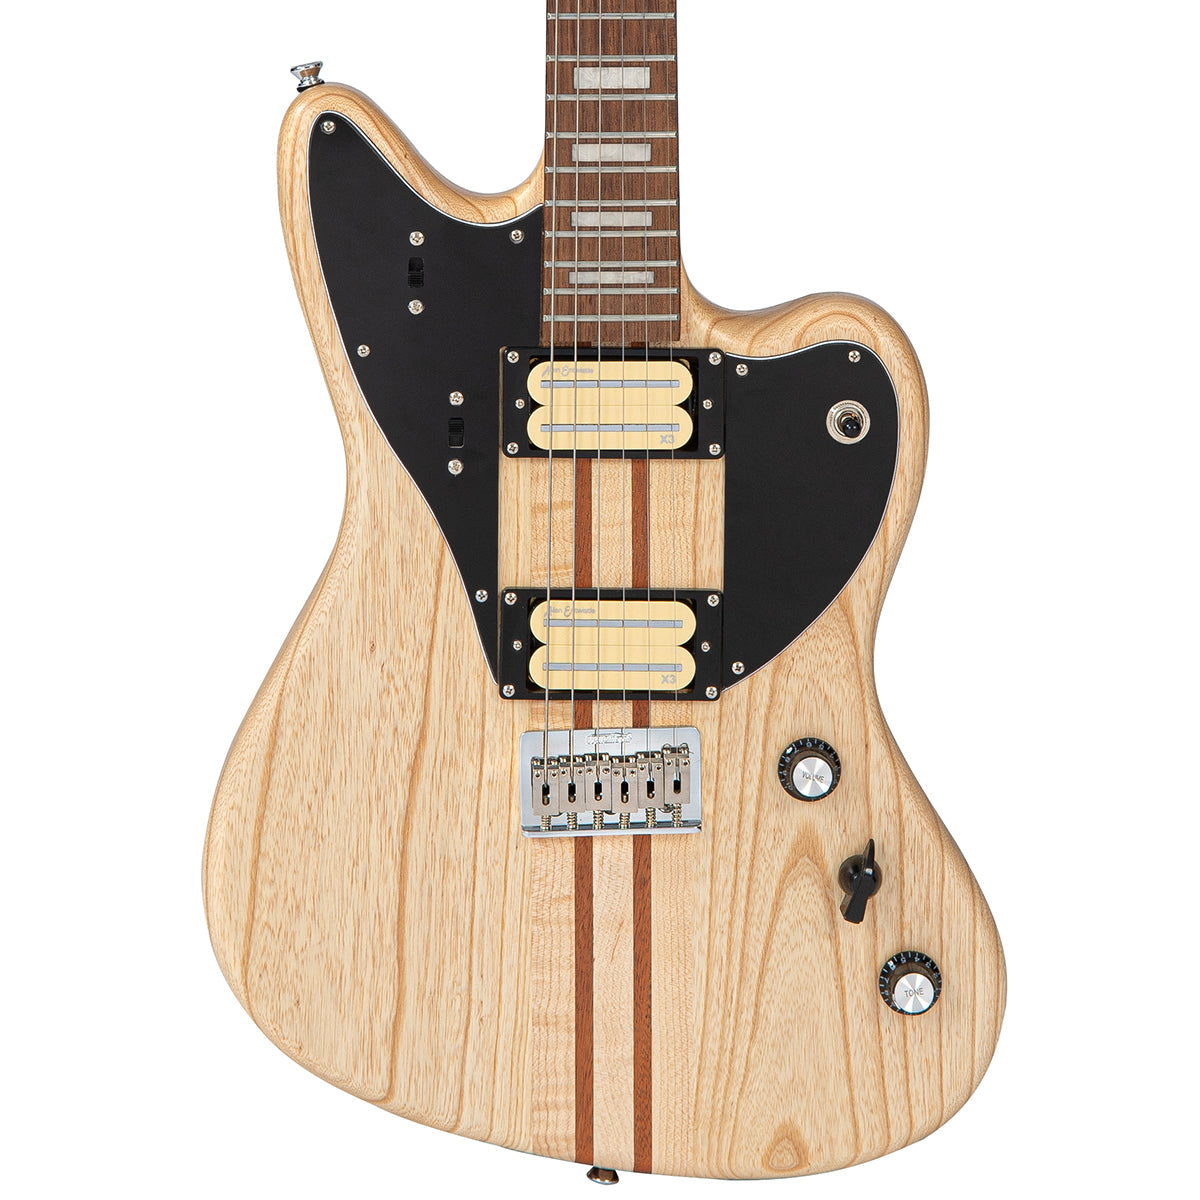 Vintage REVO Series 'Integra' Guitar ~ Satin Natural, Electric Guitars for sale at Richards Guitars.